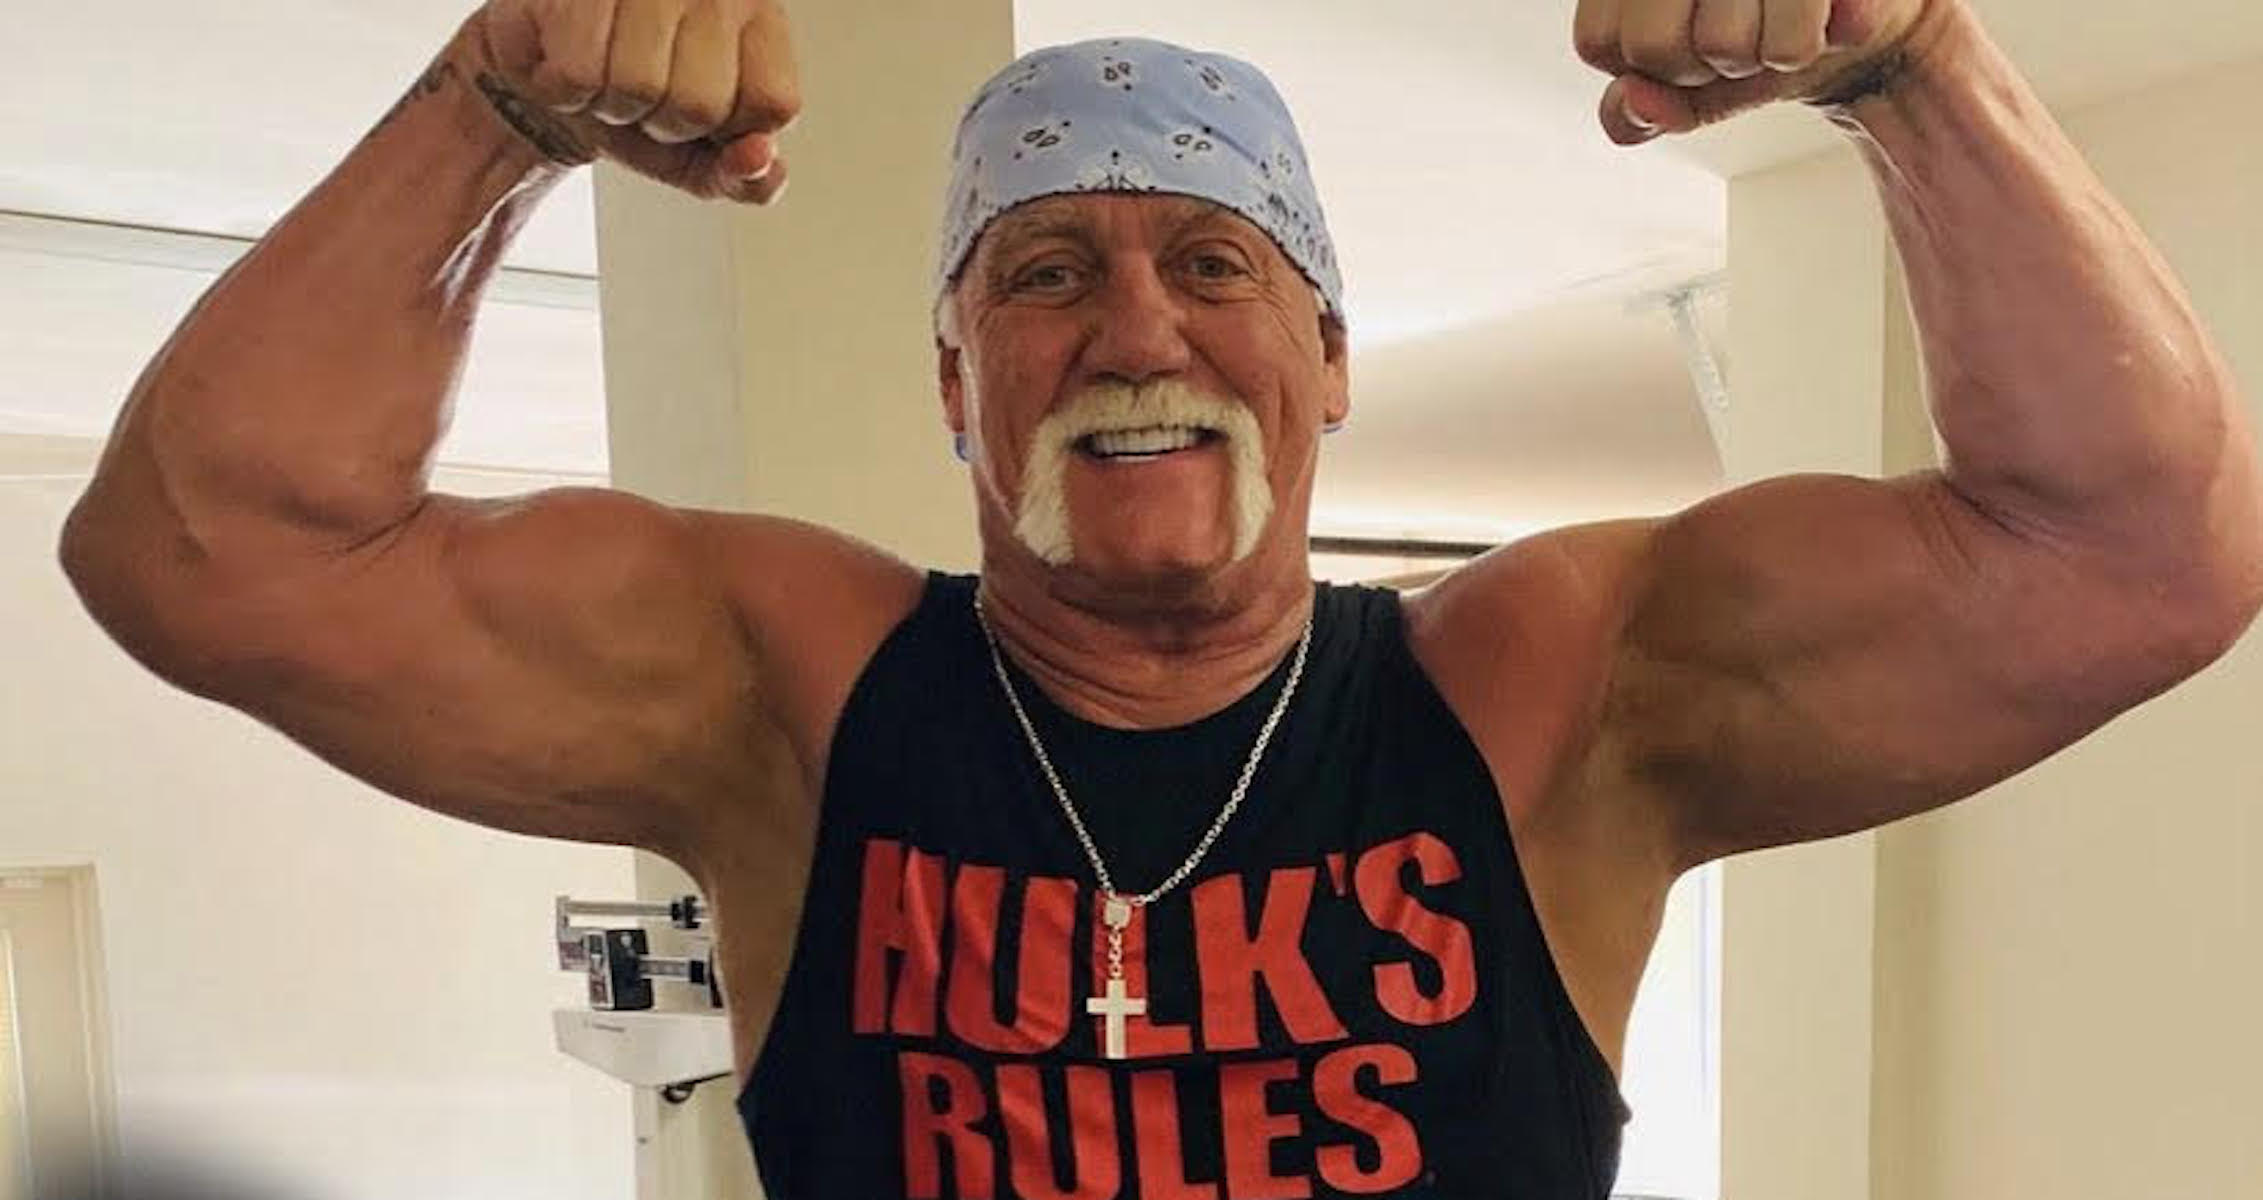 Hulk Hogan Looking Jacked In Recent Post Shares 4 ‘Hulk Rules’